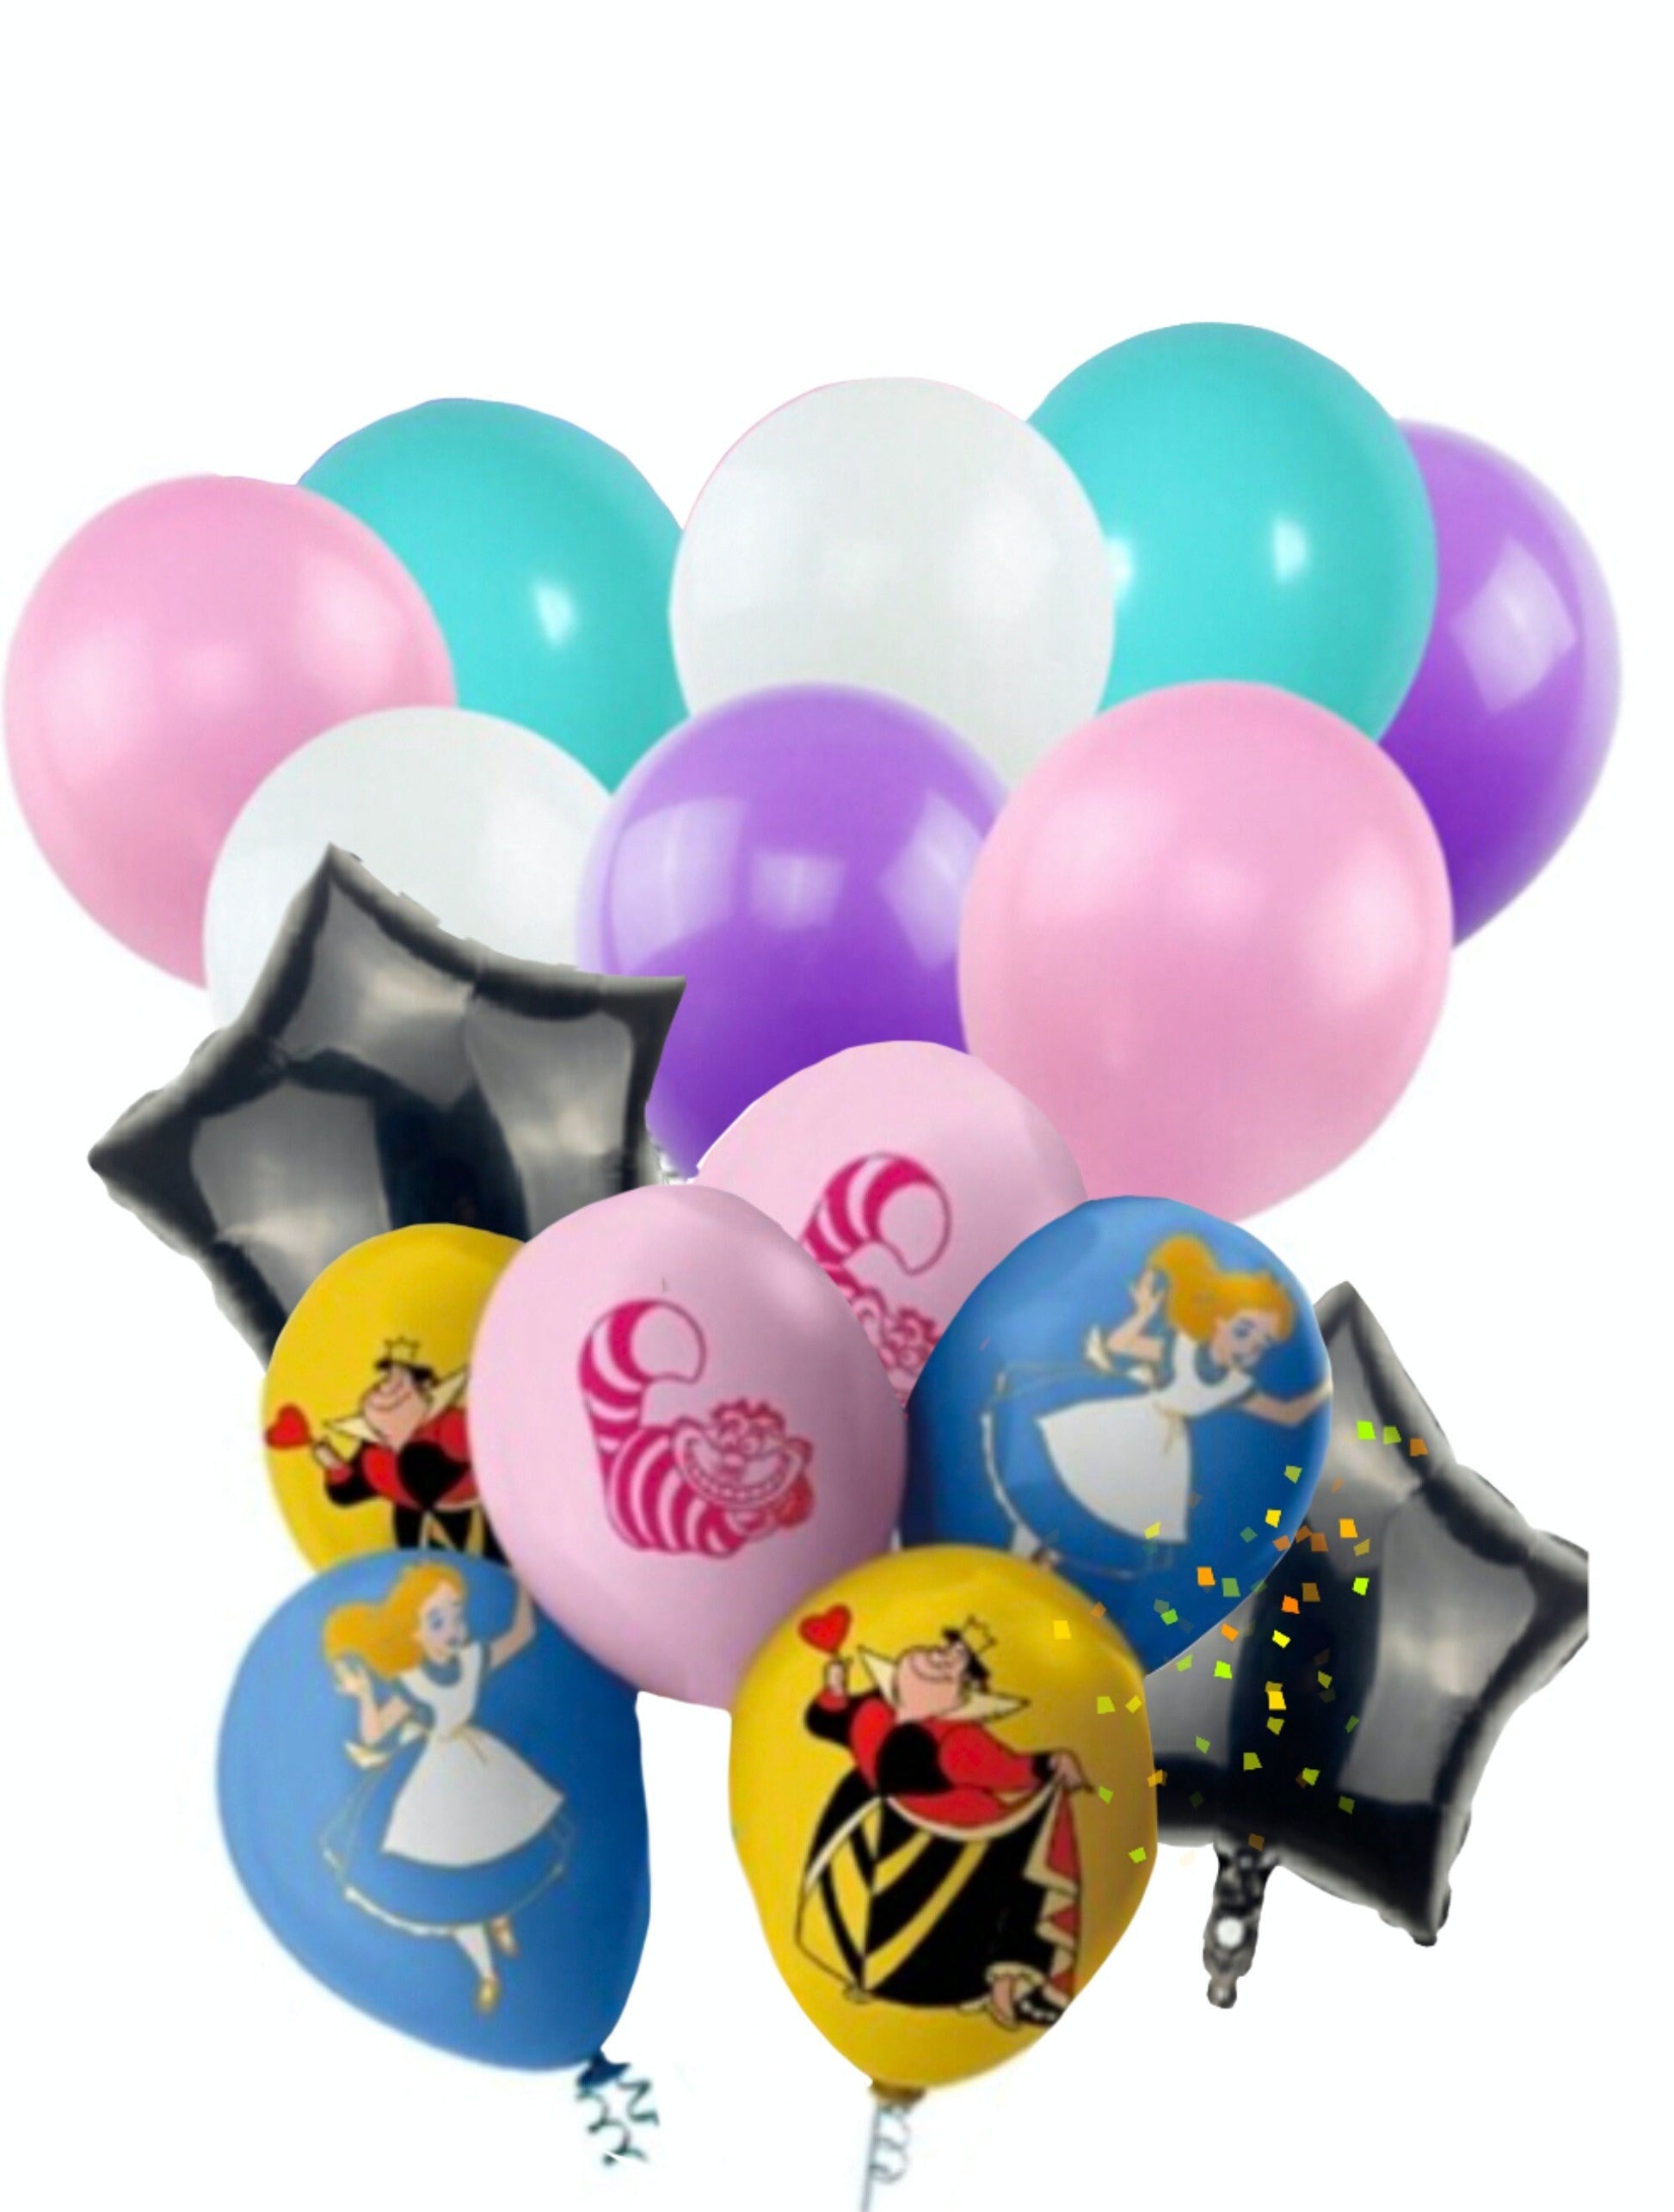 Alic.e Balloons 20pcs/Poker Aluminum Film Balloon Hearts  Checkerboard/Halloween Girl Princess Birthday Decorations/Mushroom  Balloons/Alice in